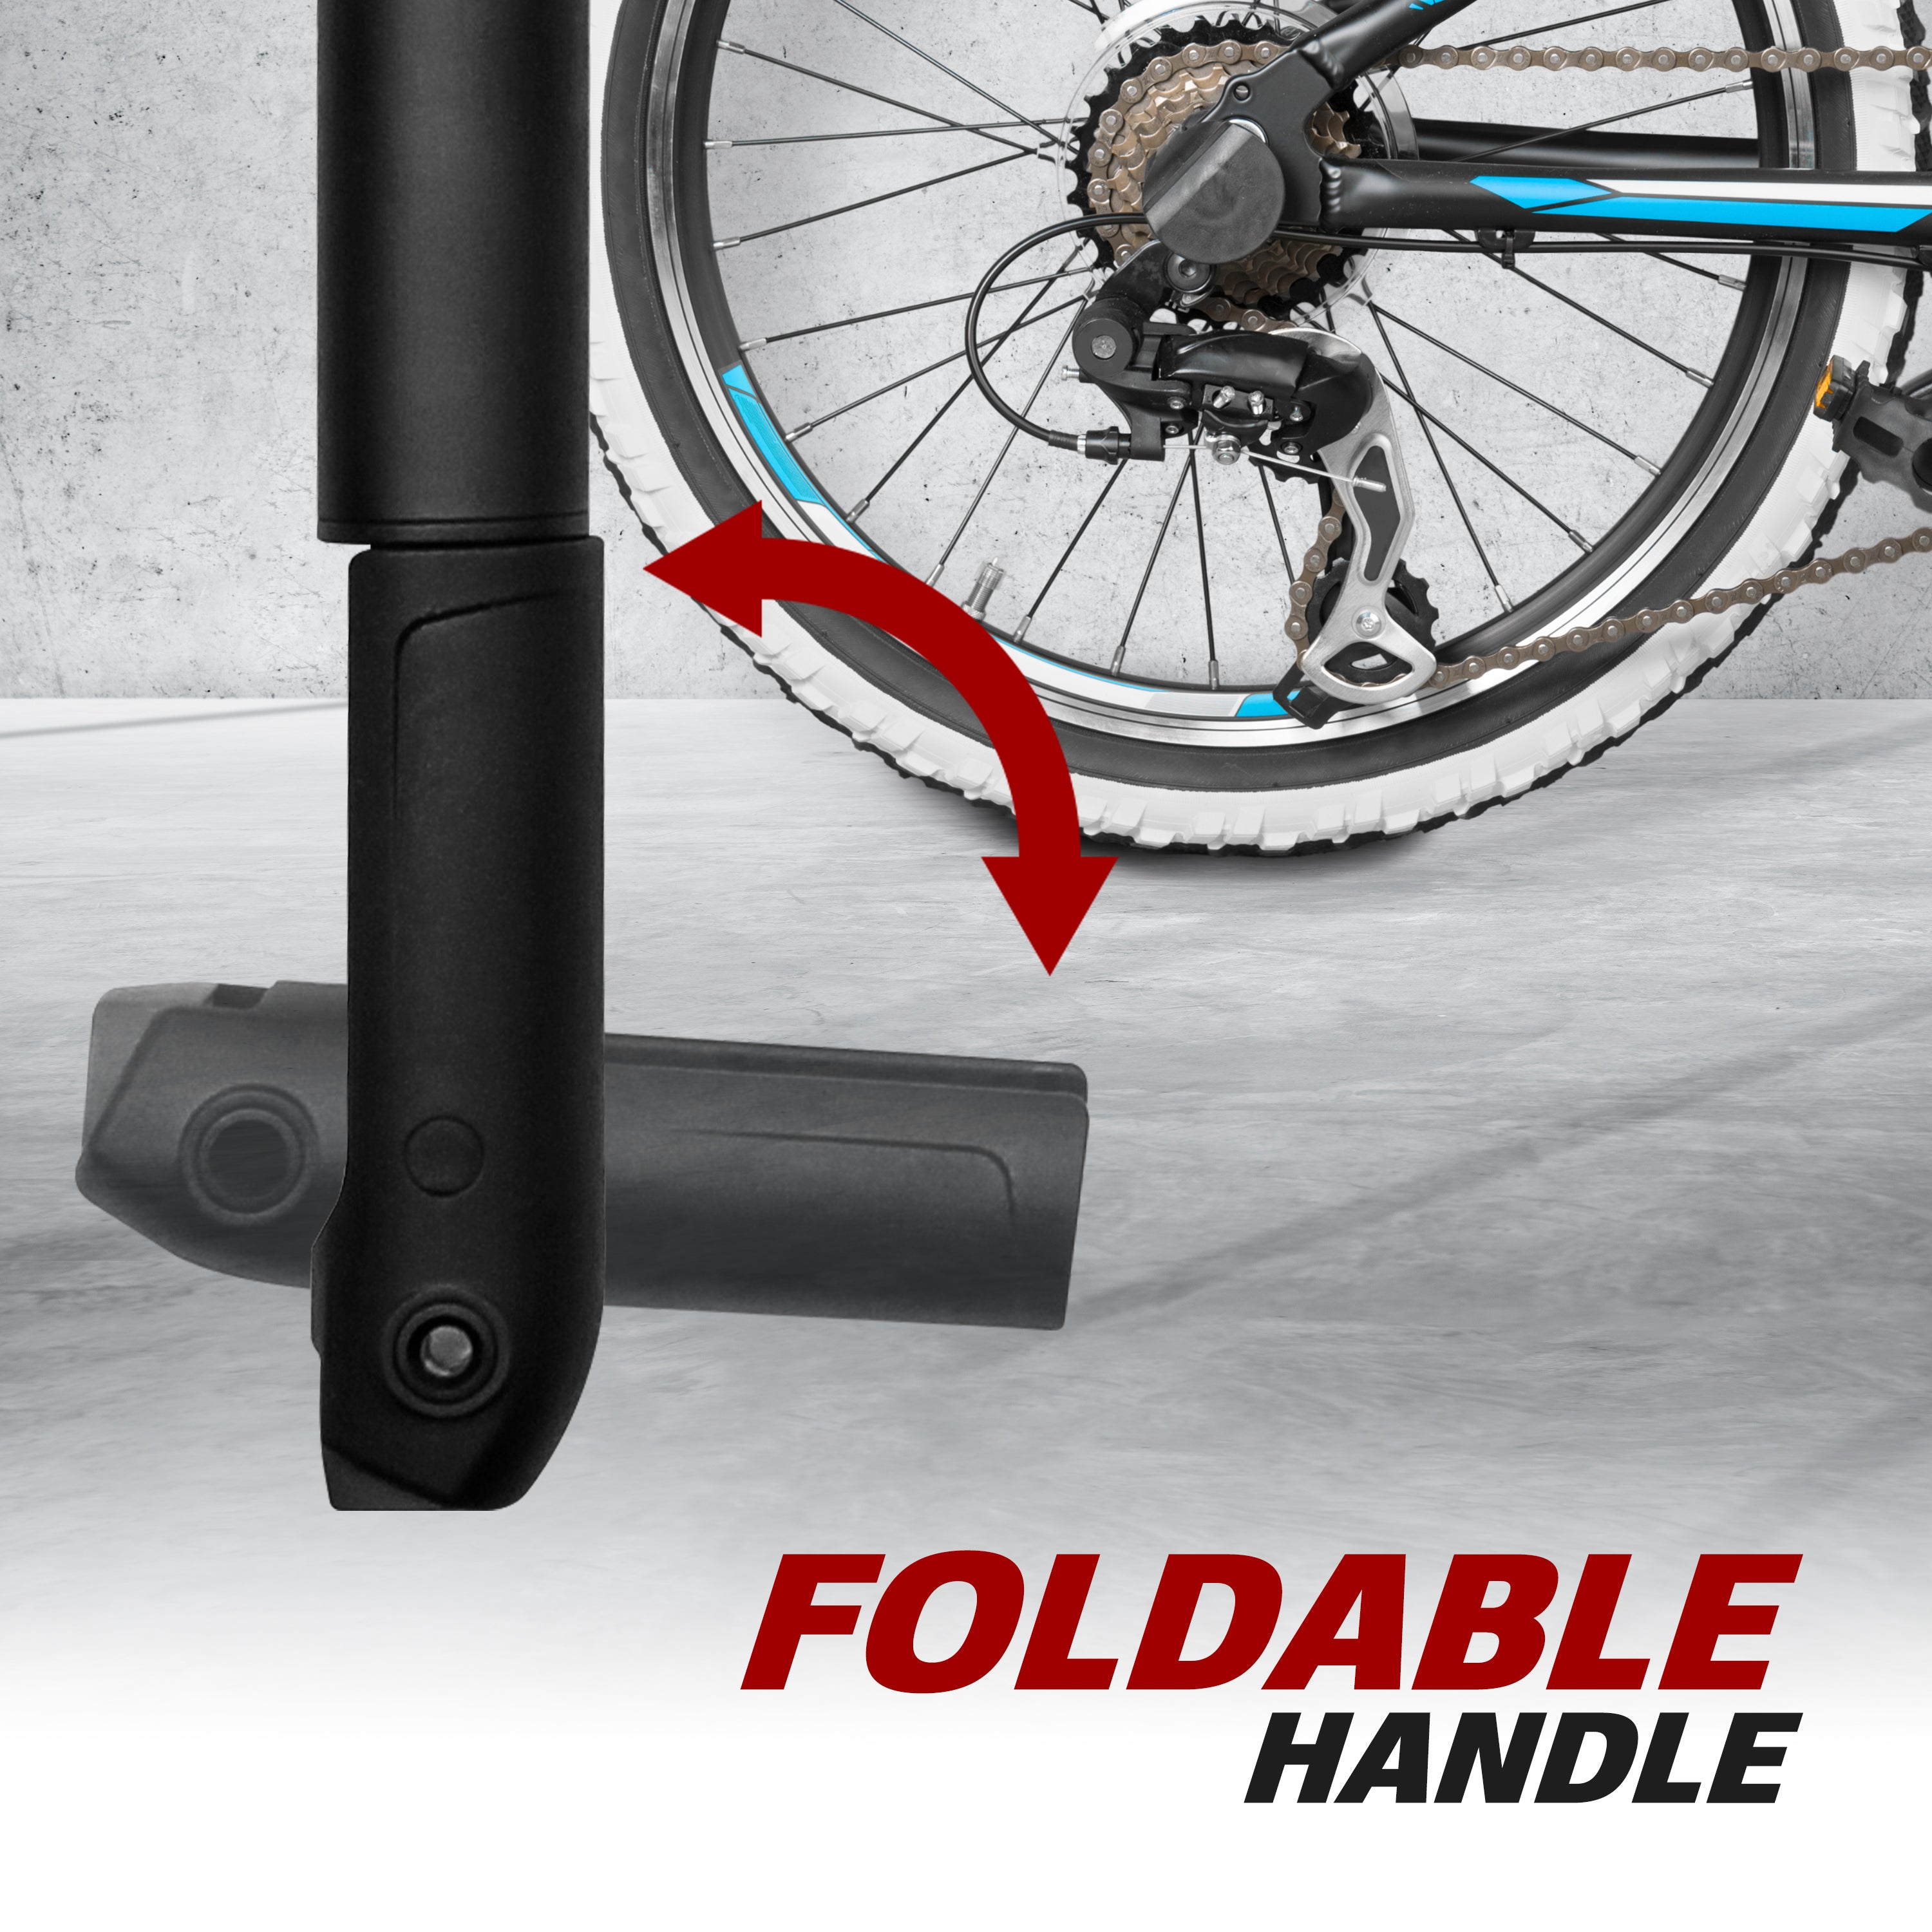 Foldable Handle Design